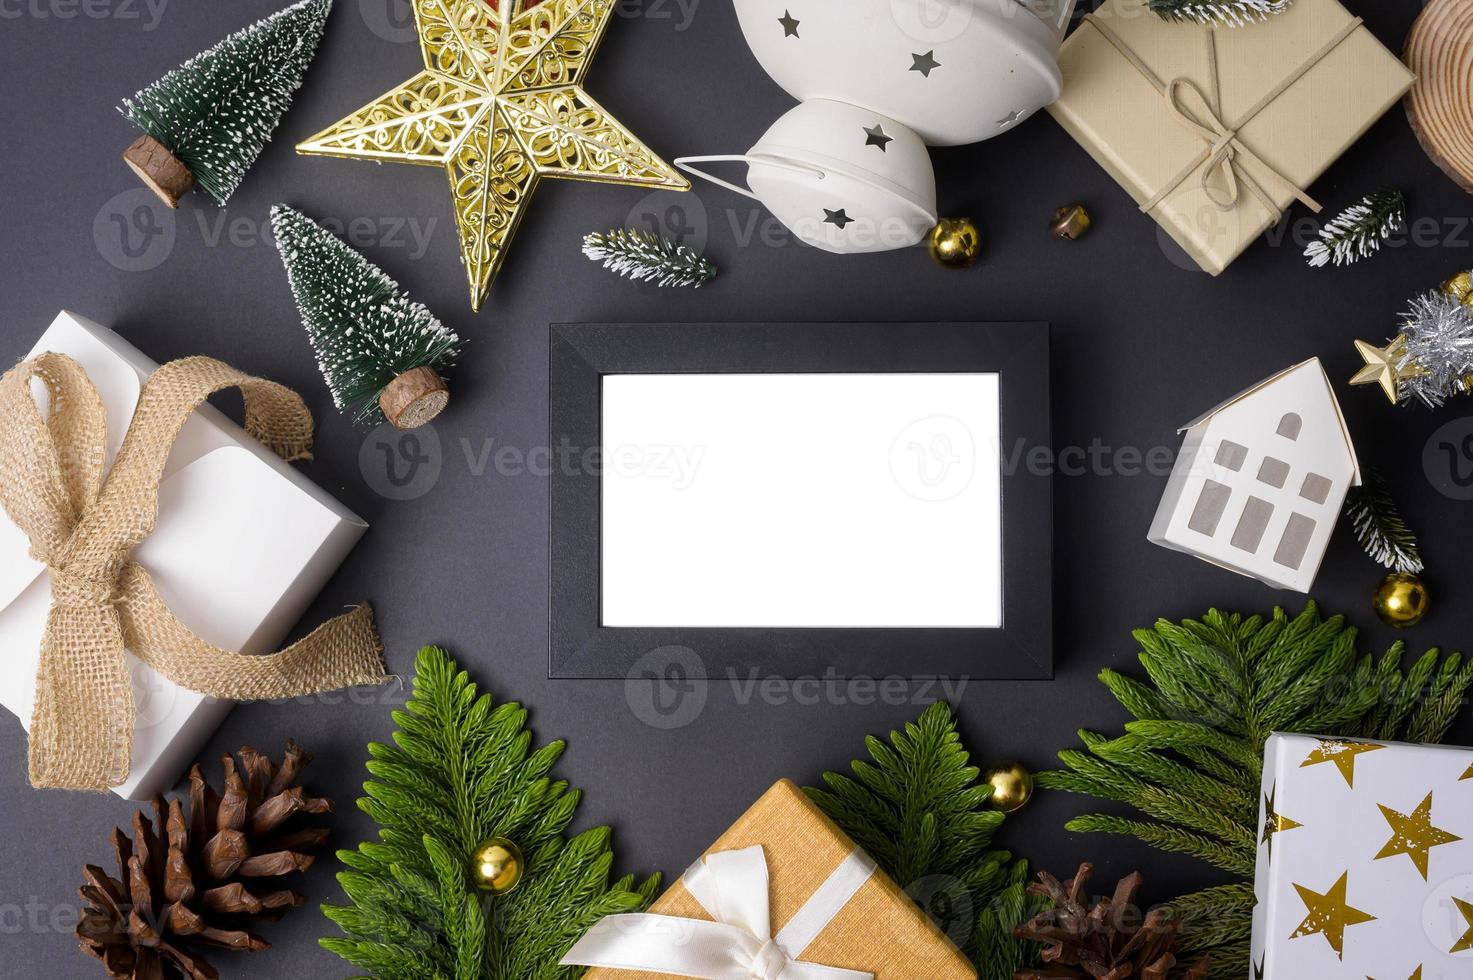 jul dekorationer på svart bakgrund foto